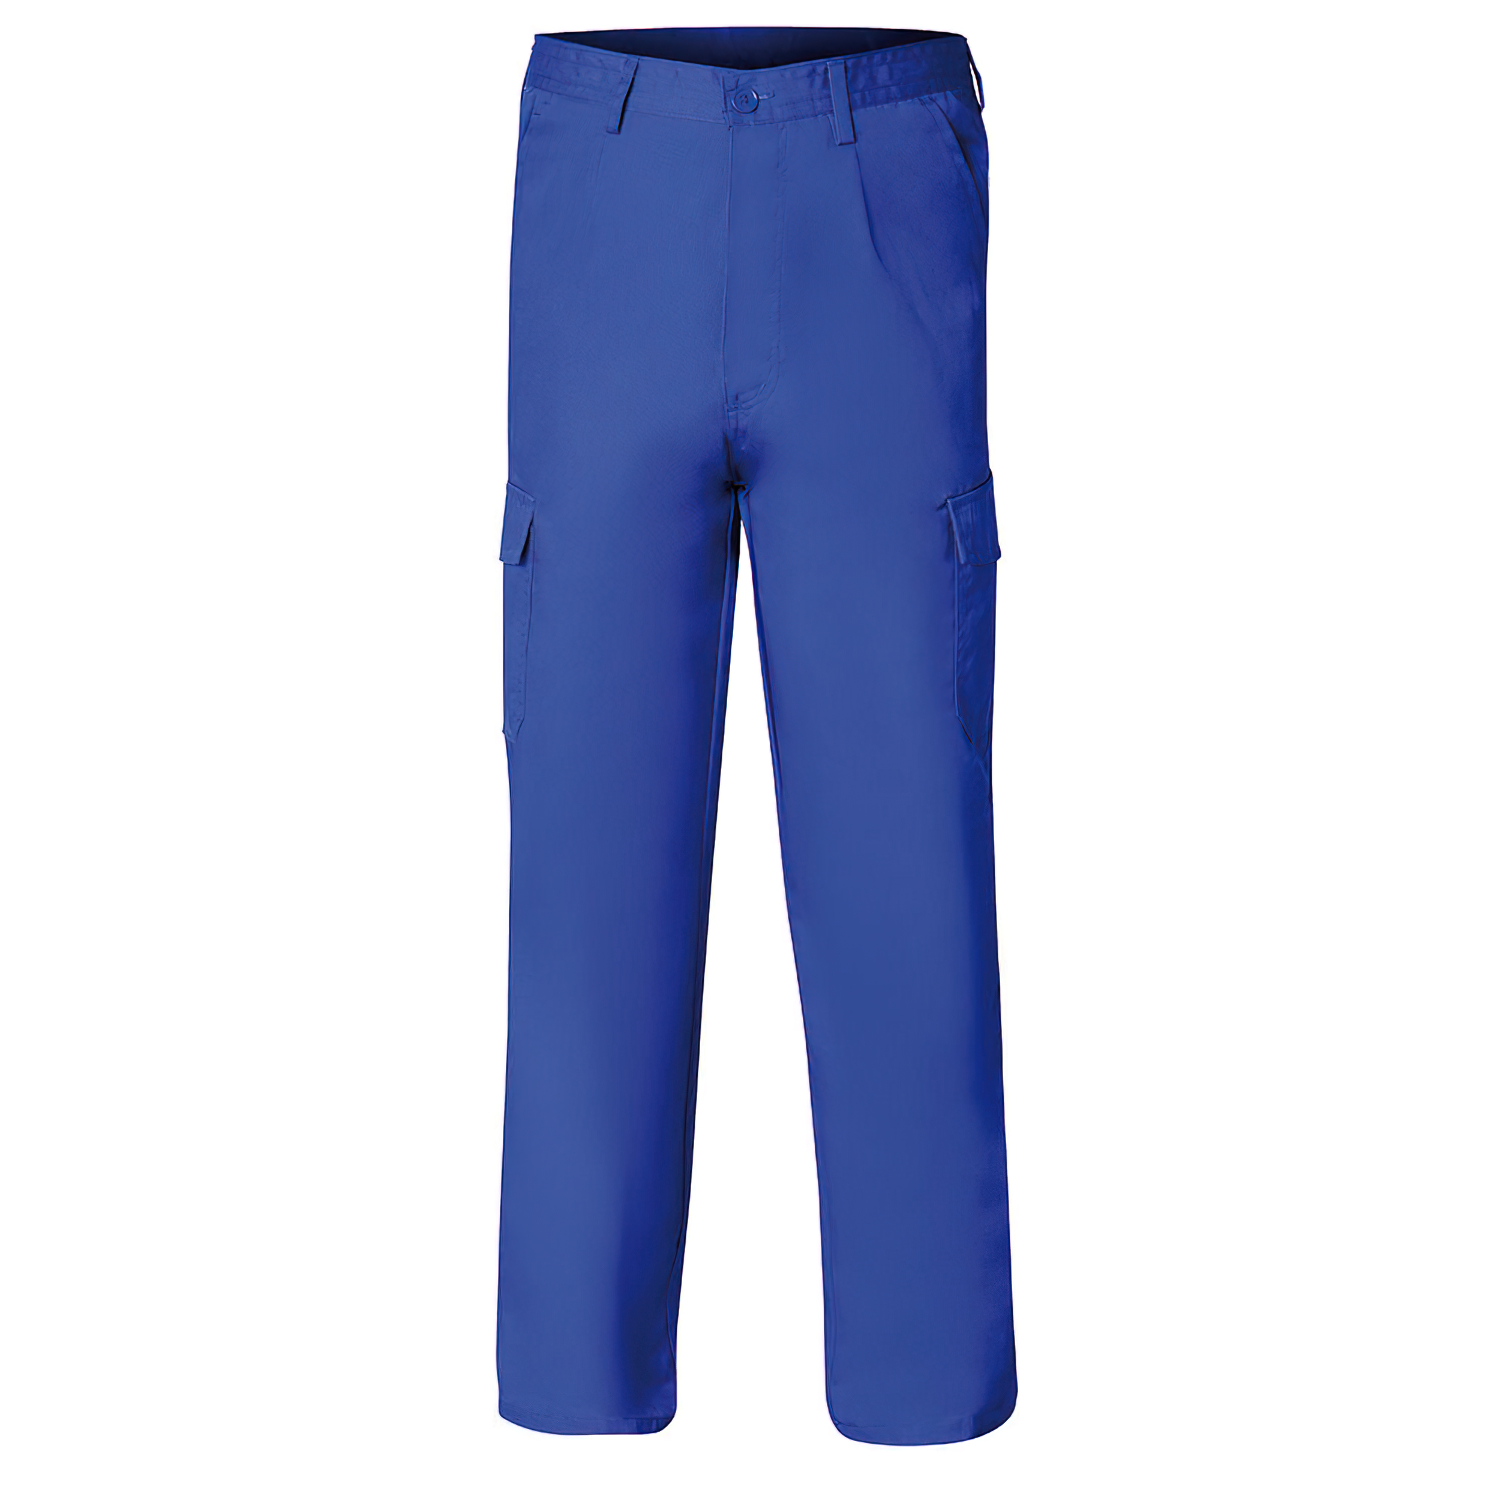 Pantalon De Trabajo Largo, Color Azul, Multibolsillos, Resistente, Talla 40